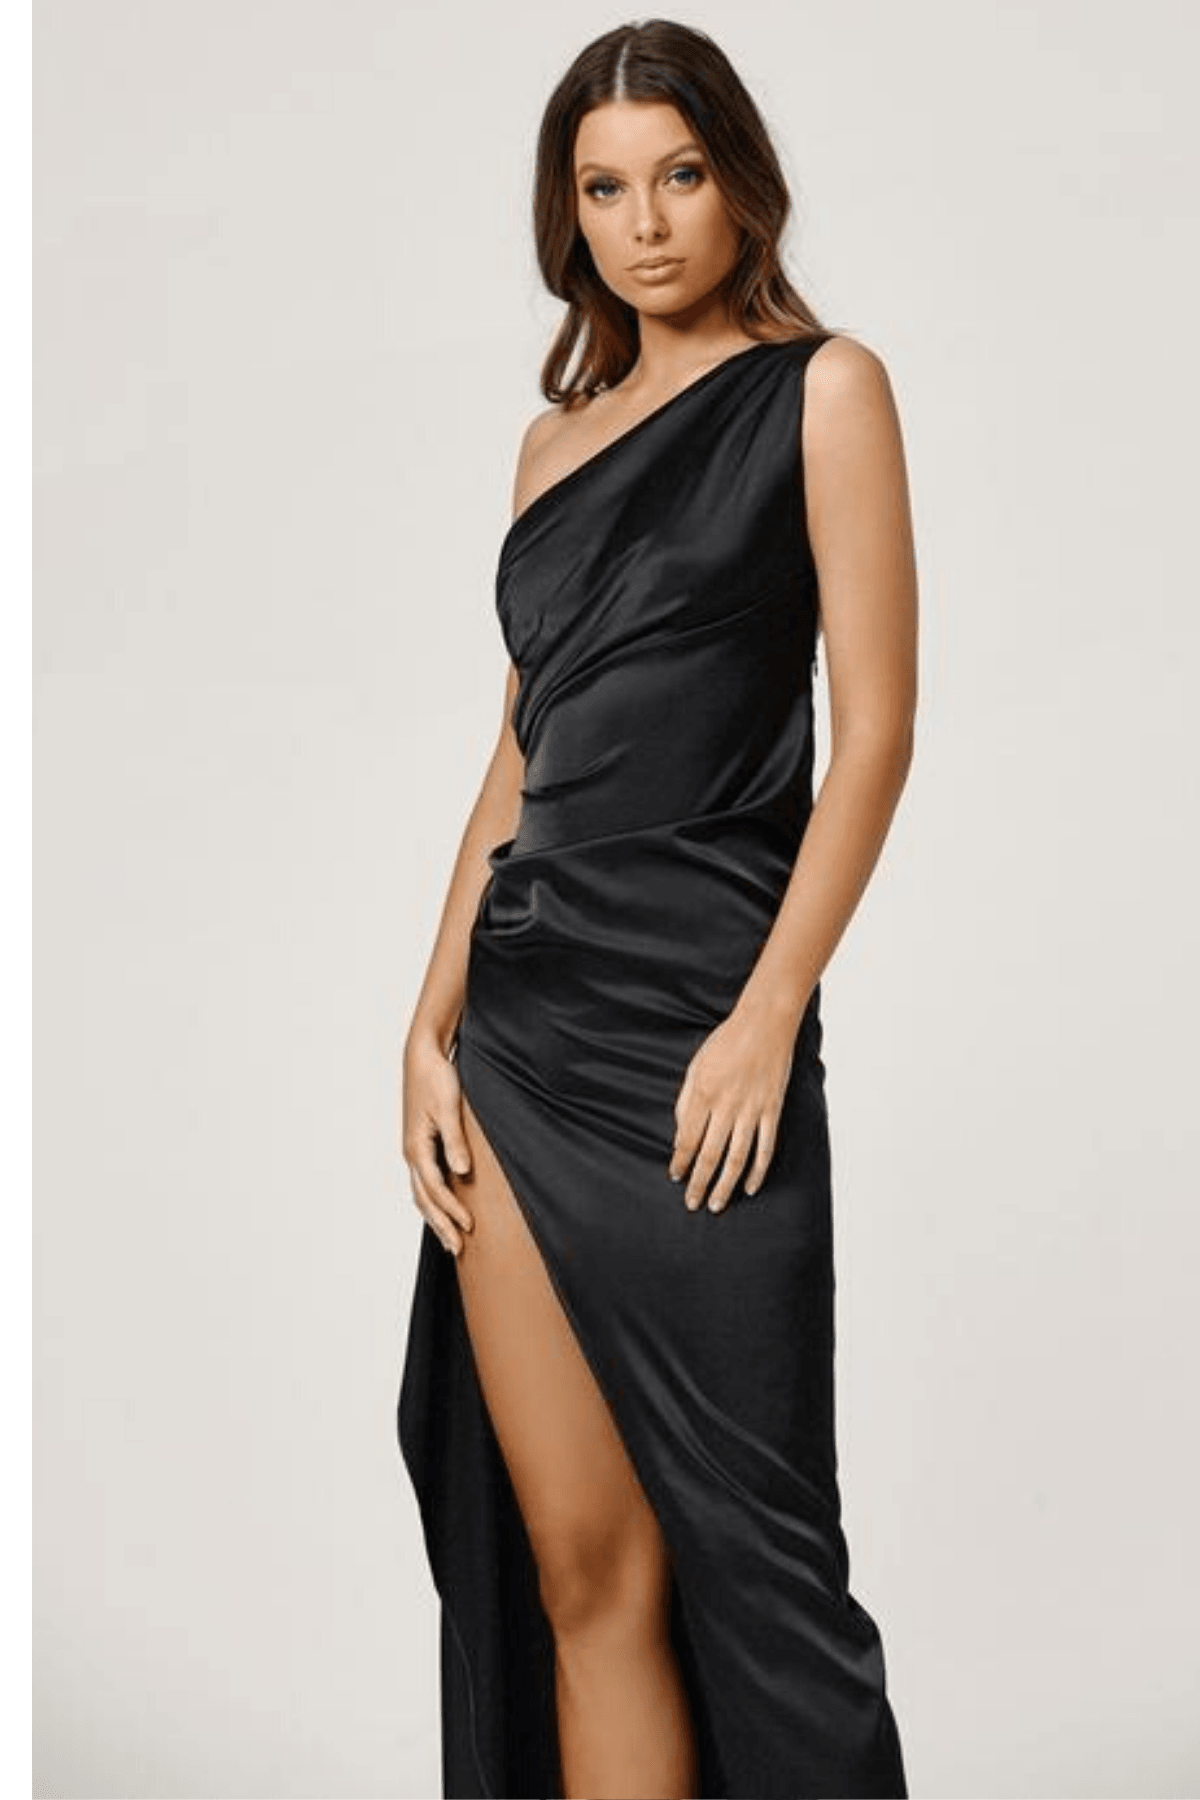 Lexi LEXI Samira Dress (Black) - RRP $379 - lexi-samira-dress-black---rrp-9-dress-for-a-night-30754863.png